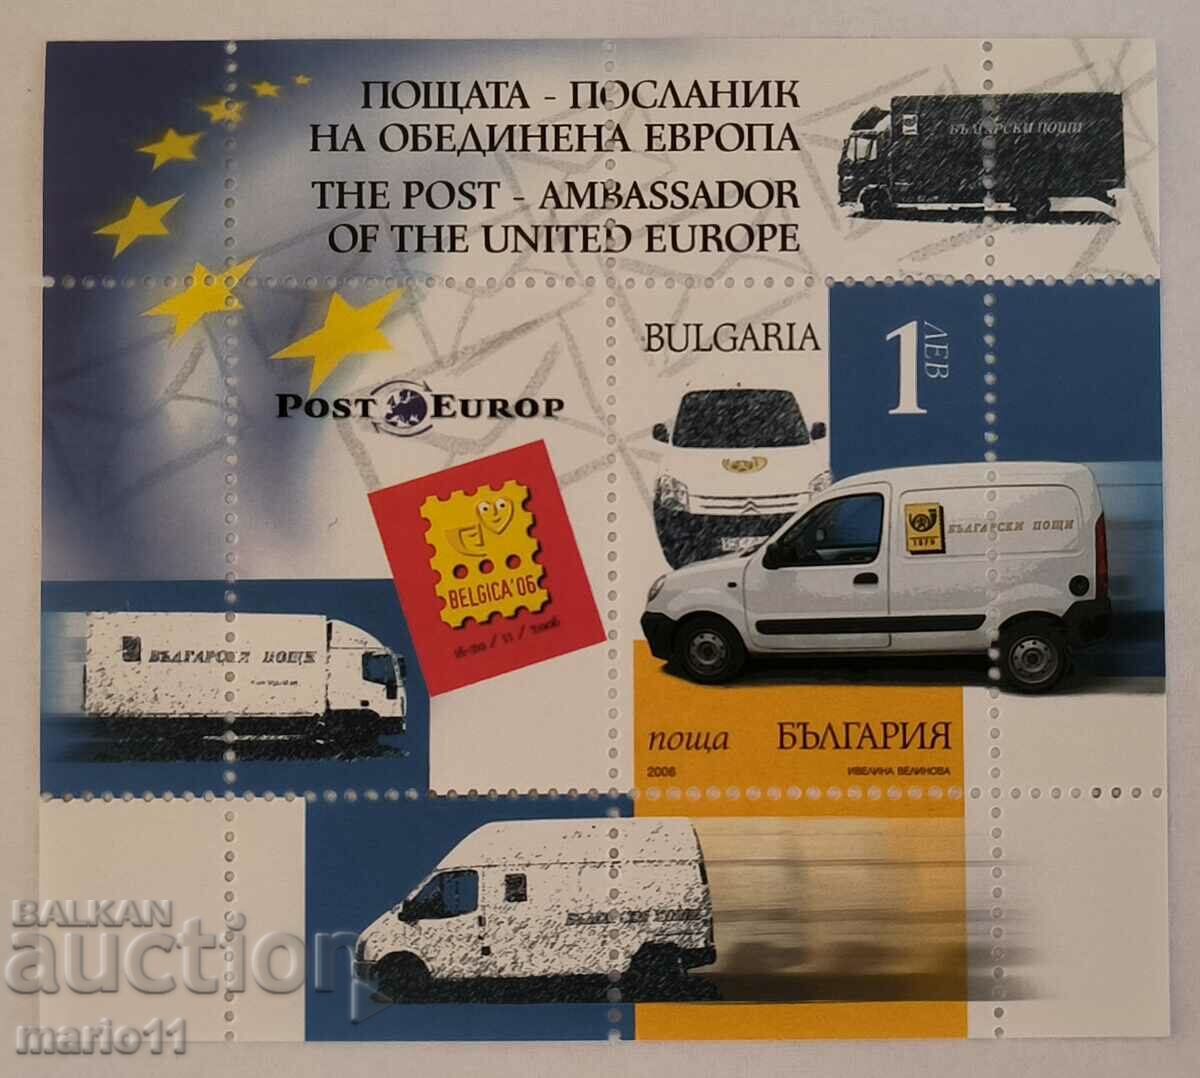 Bulgaria - 4756 - Post Ambassador of United Europe